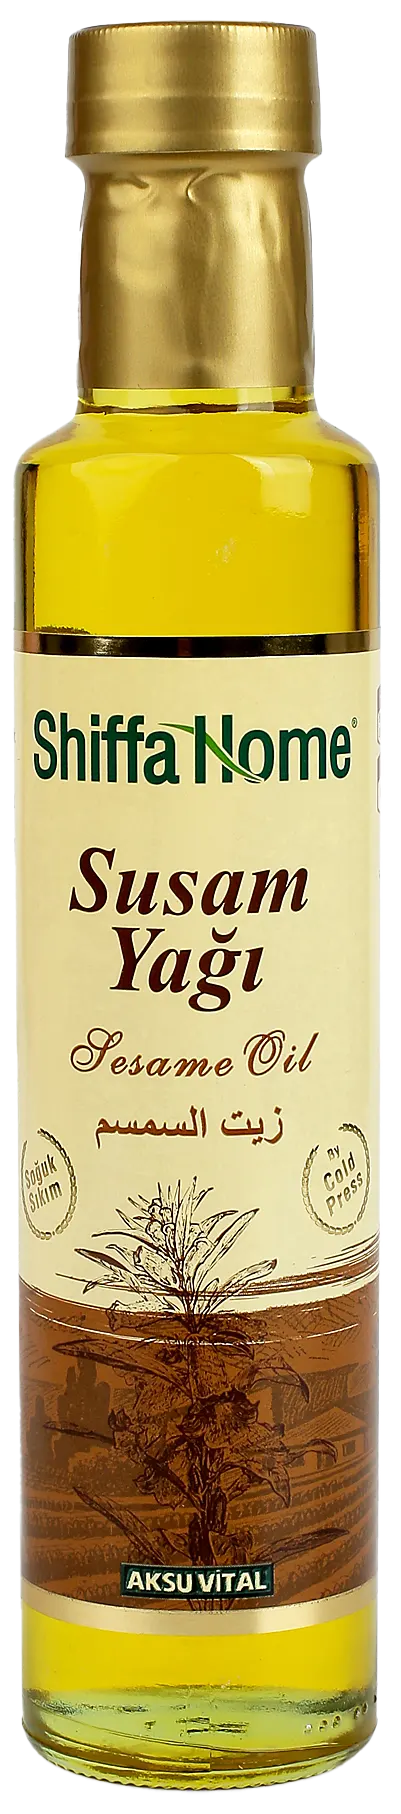 Shiffa Home - Susam Yağı 250 ml.